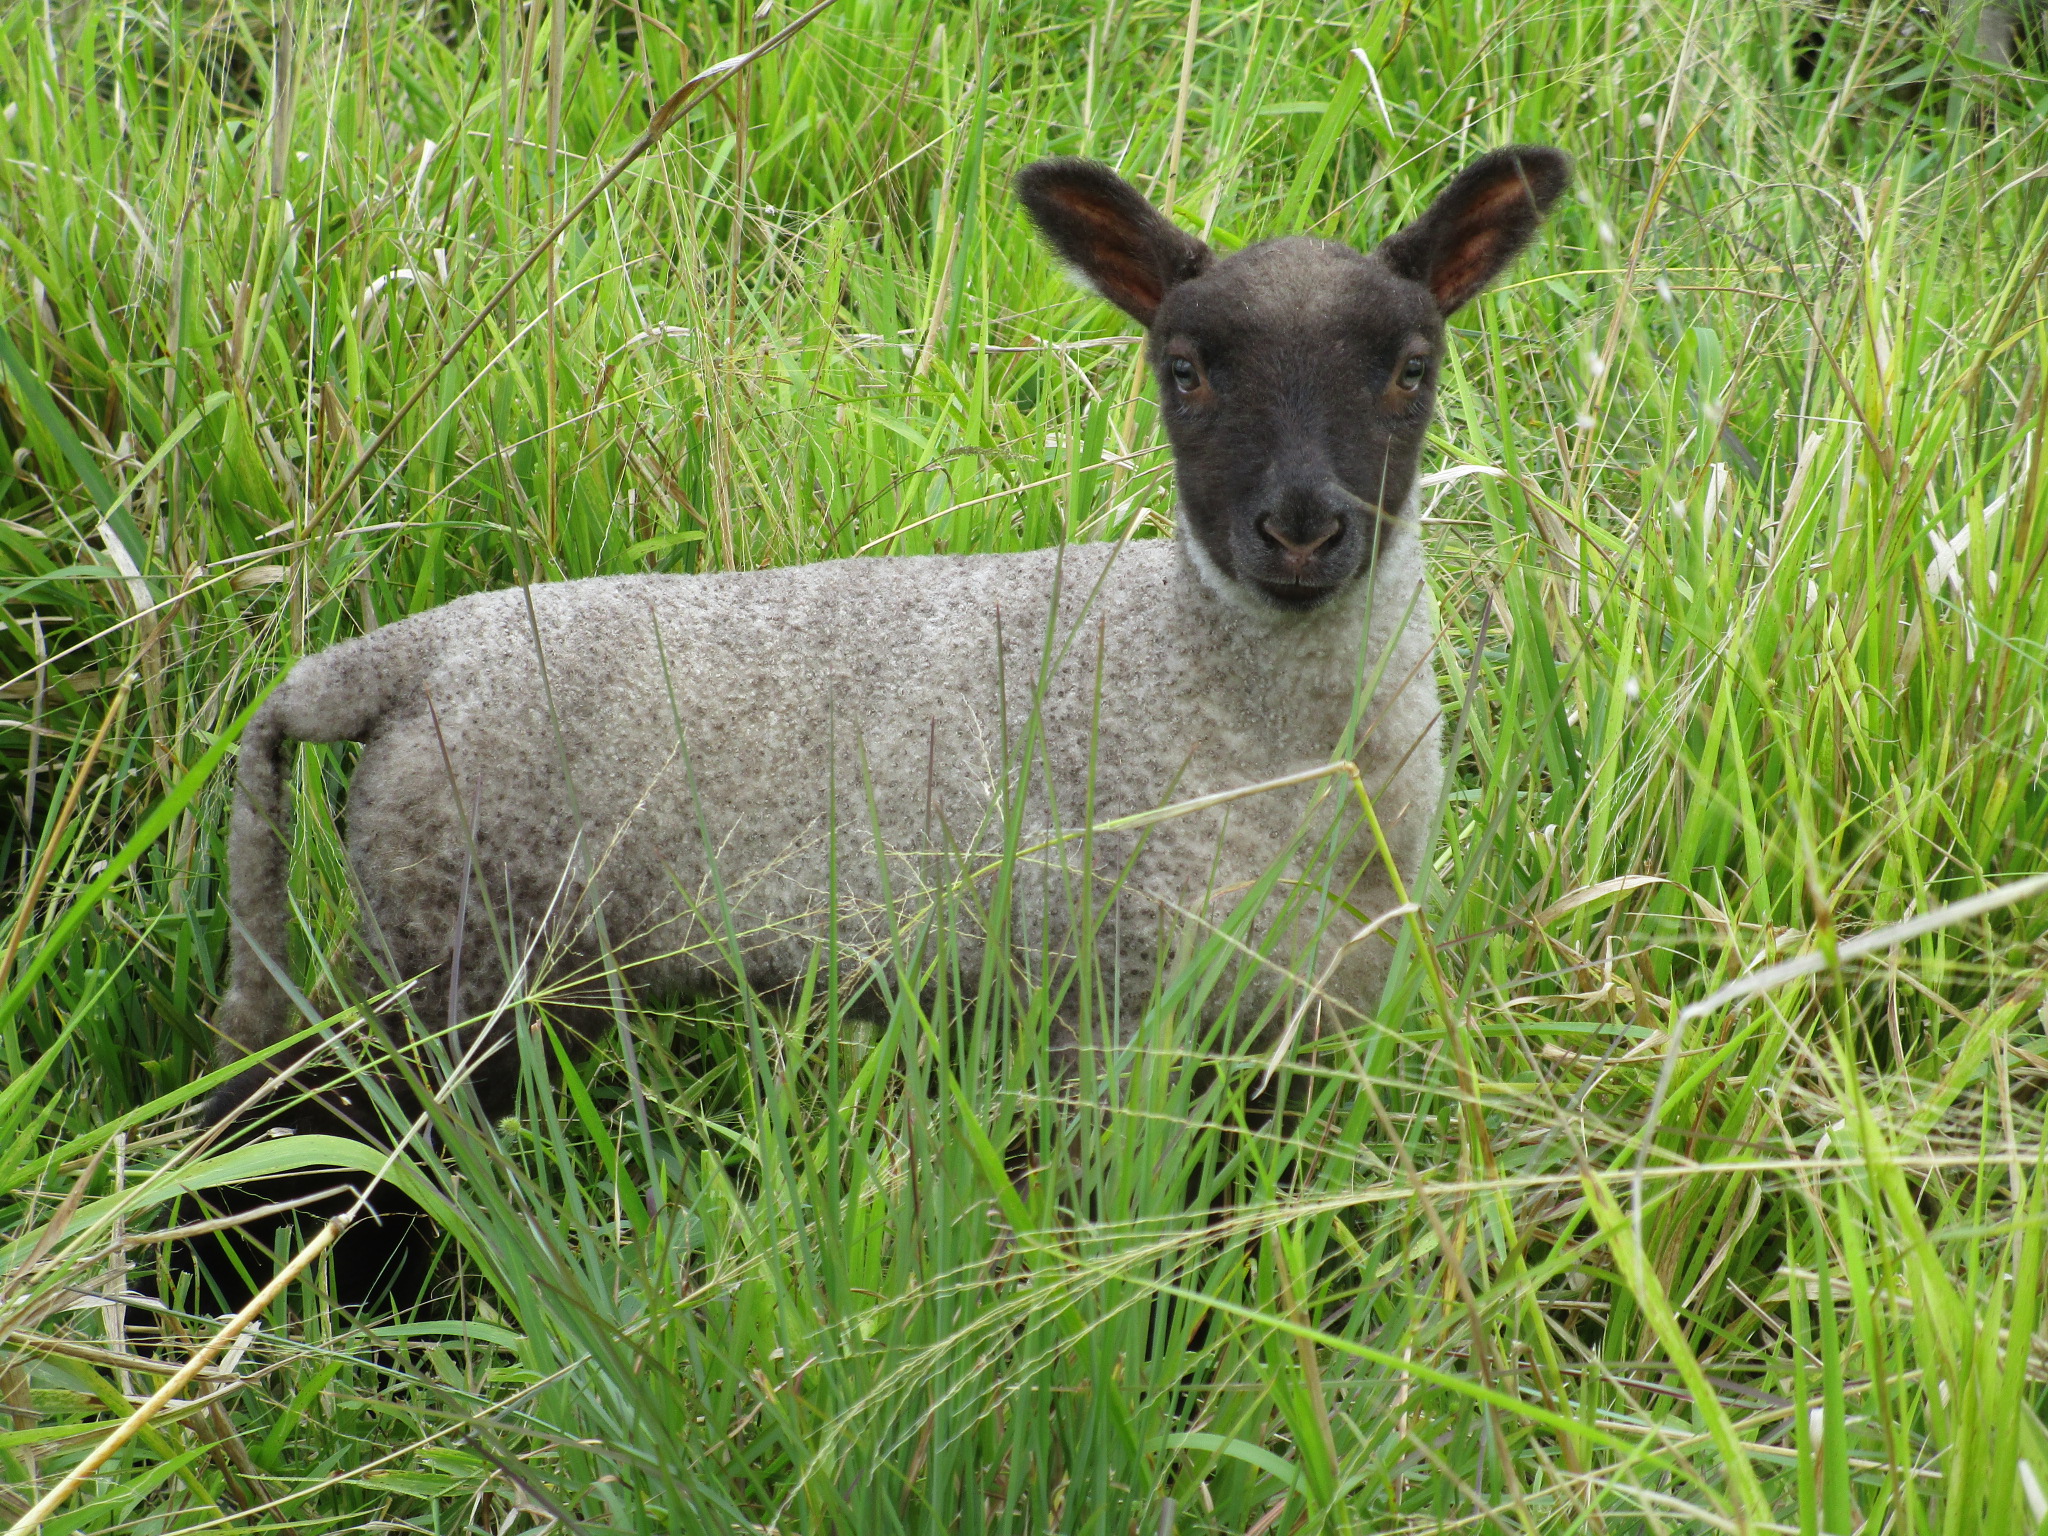 1st born ewe at 16 days old